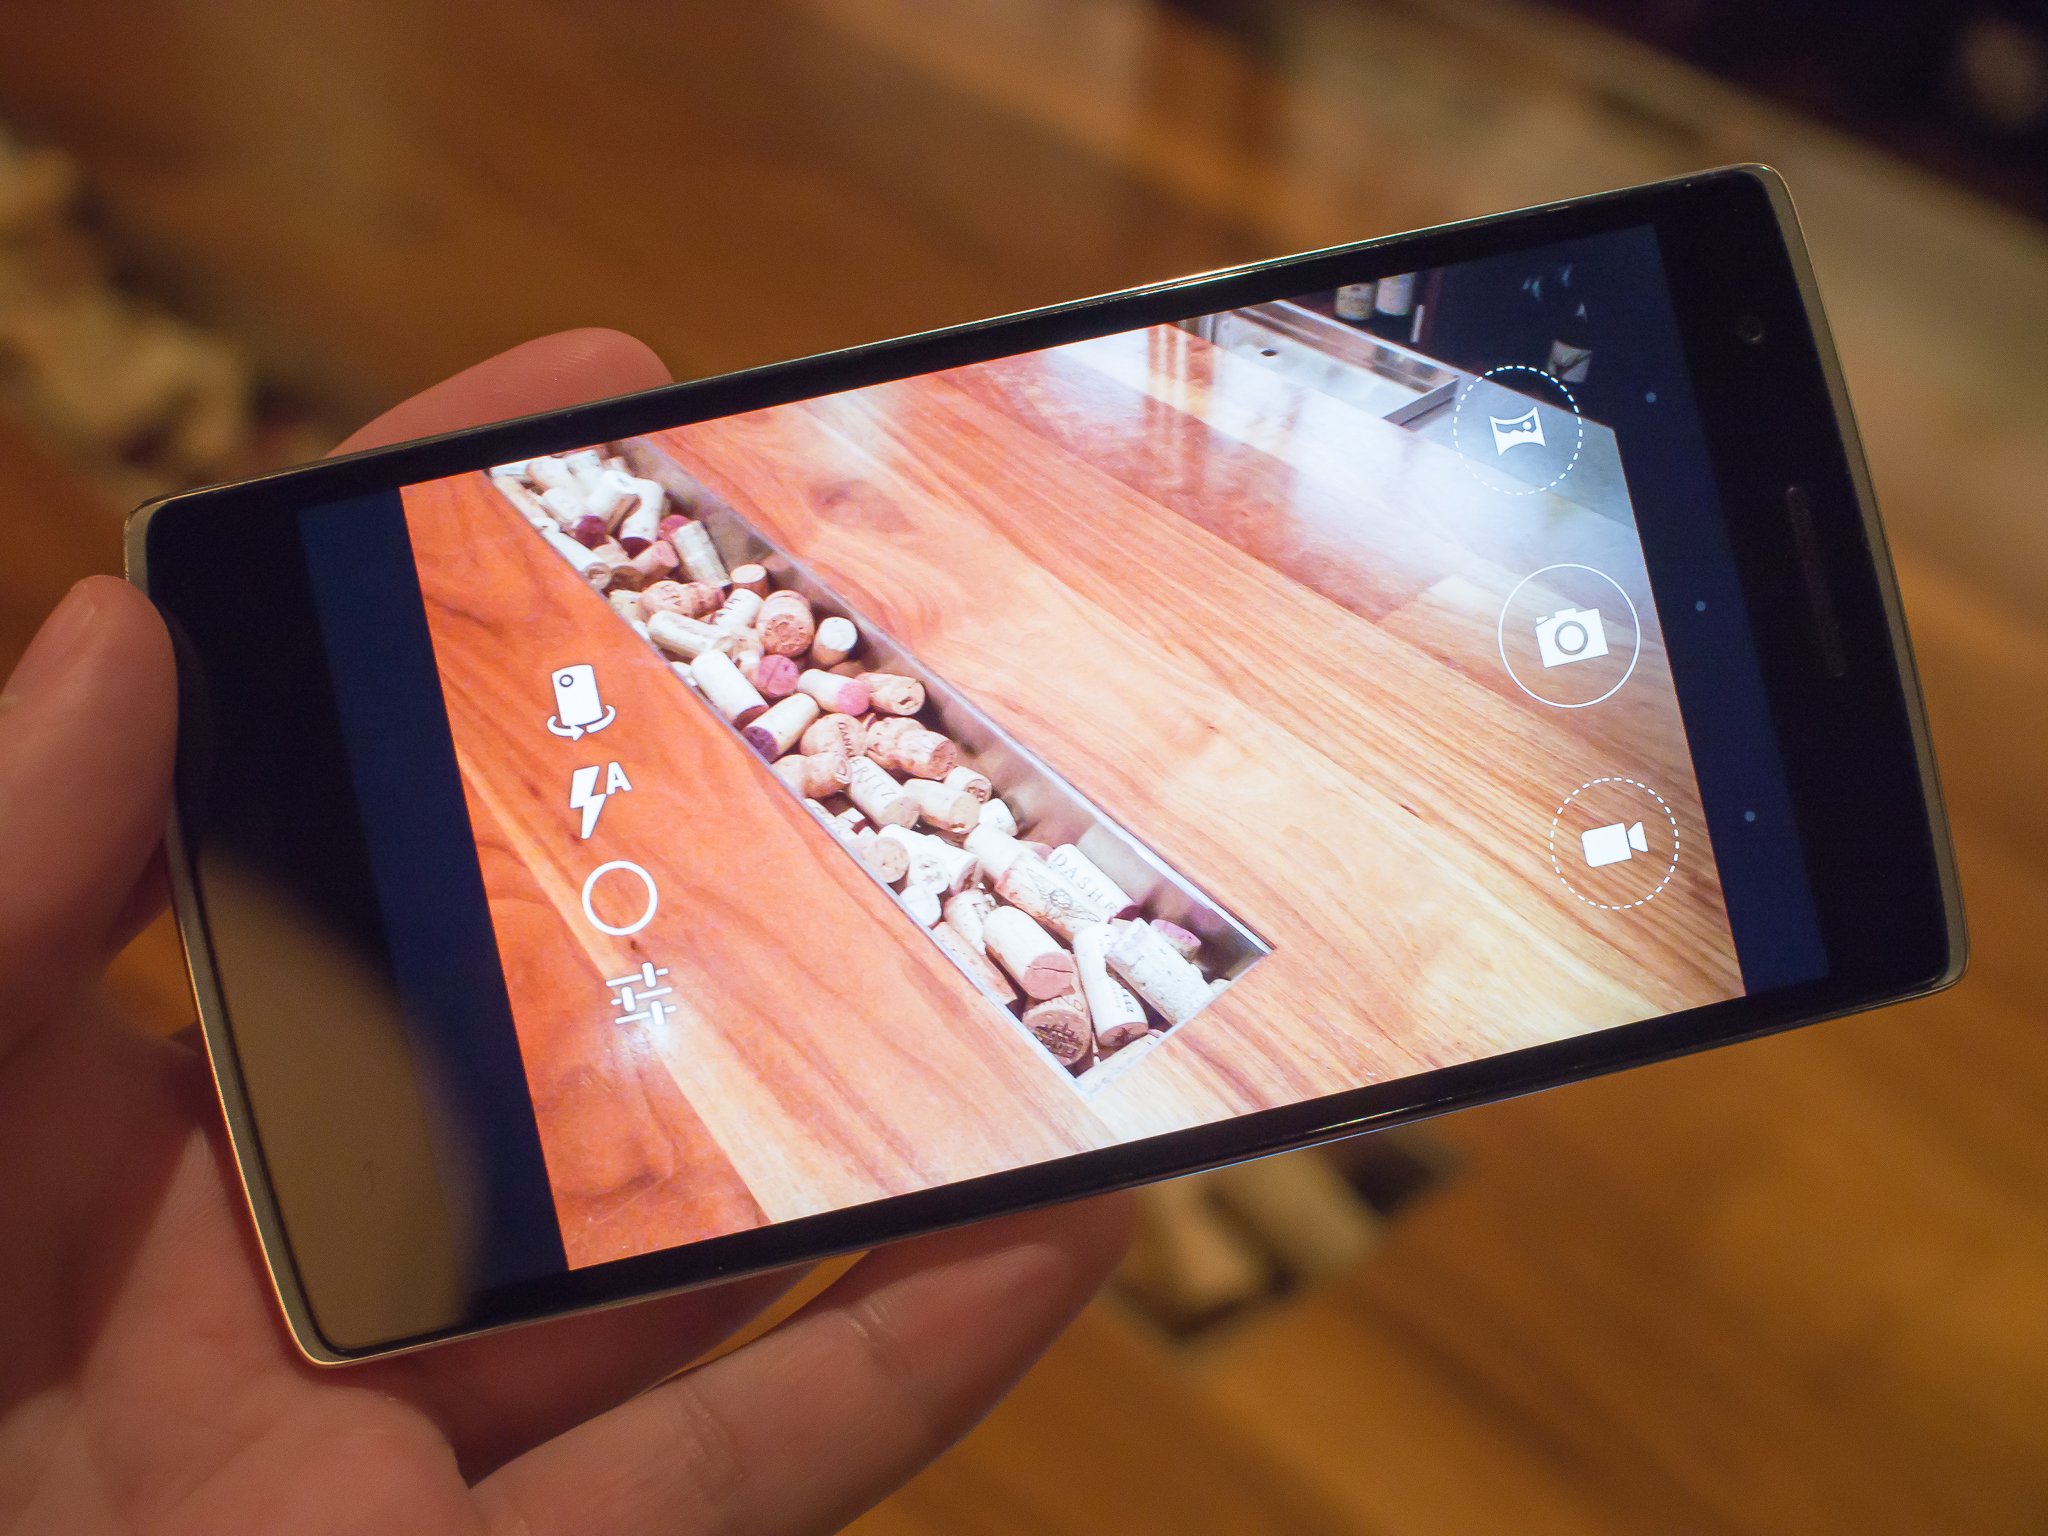 OnePlus One camera UI